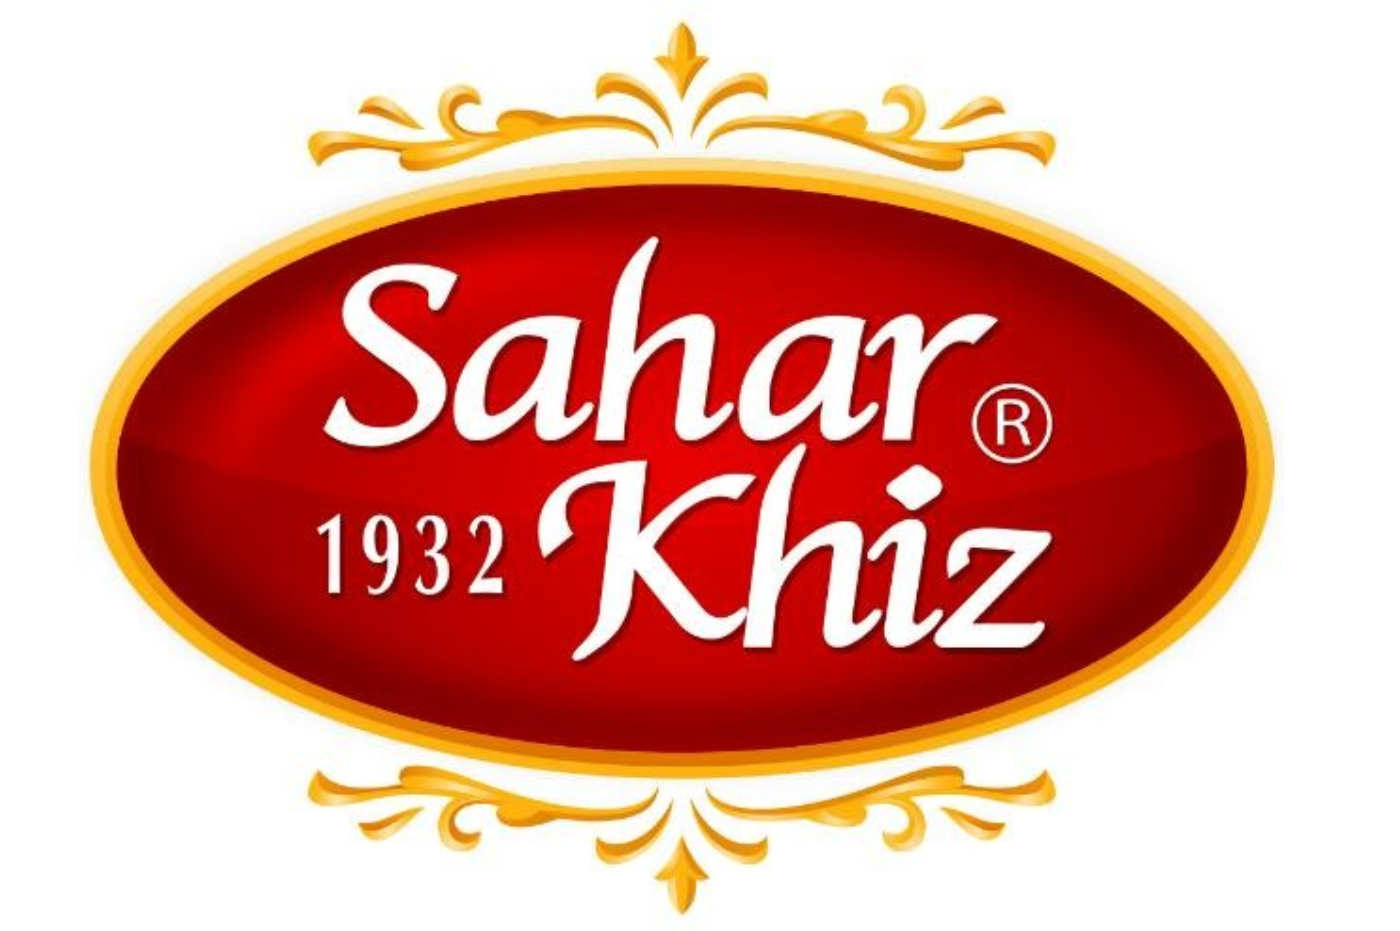 Saharkhiz